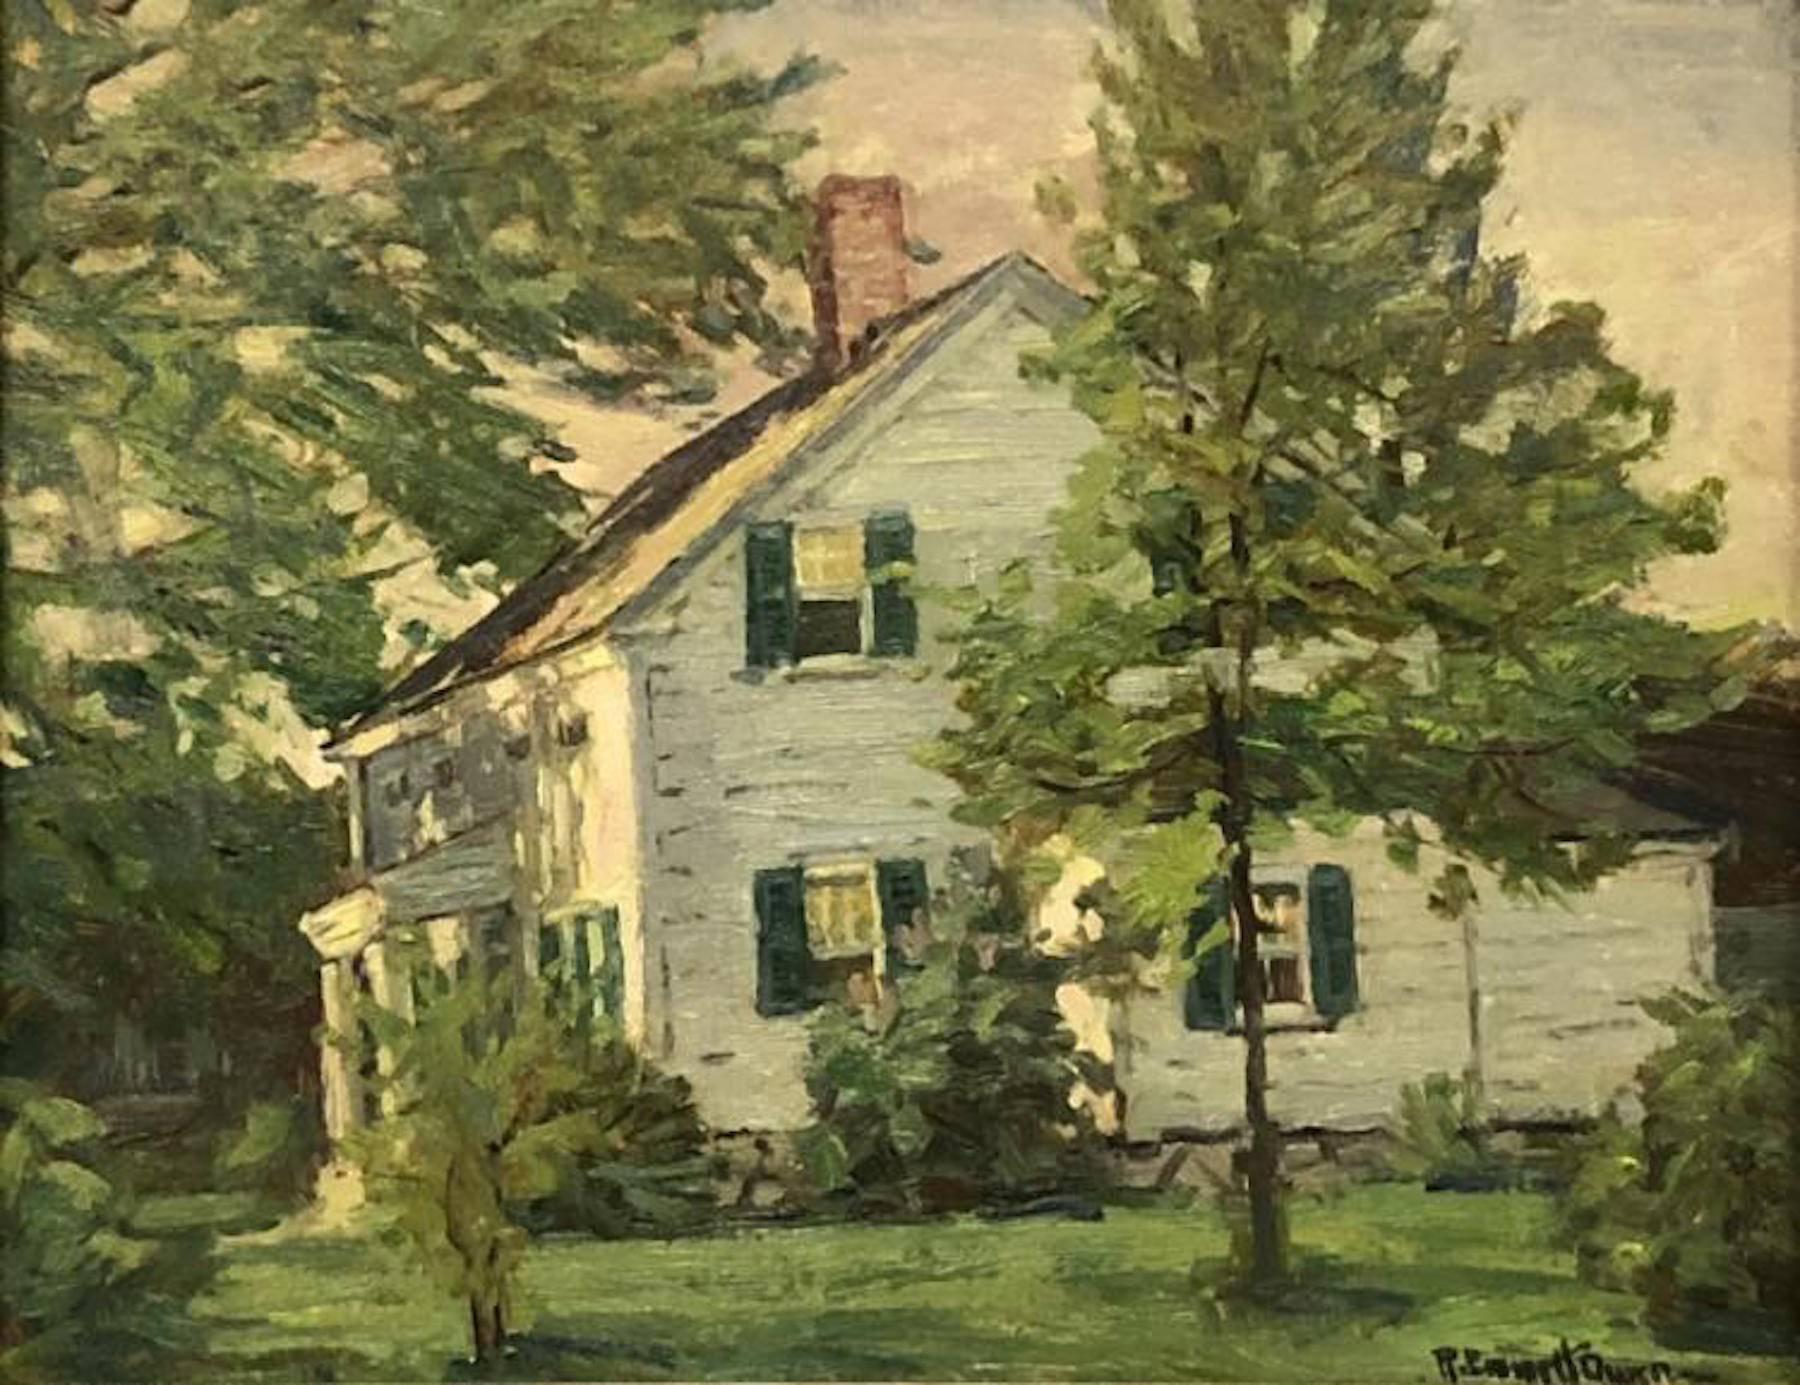 Robert Emmett Owen (1878-1957)
Twilight landscape 
American impressionist
Oil on board
Signed lower right, 